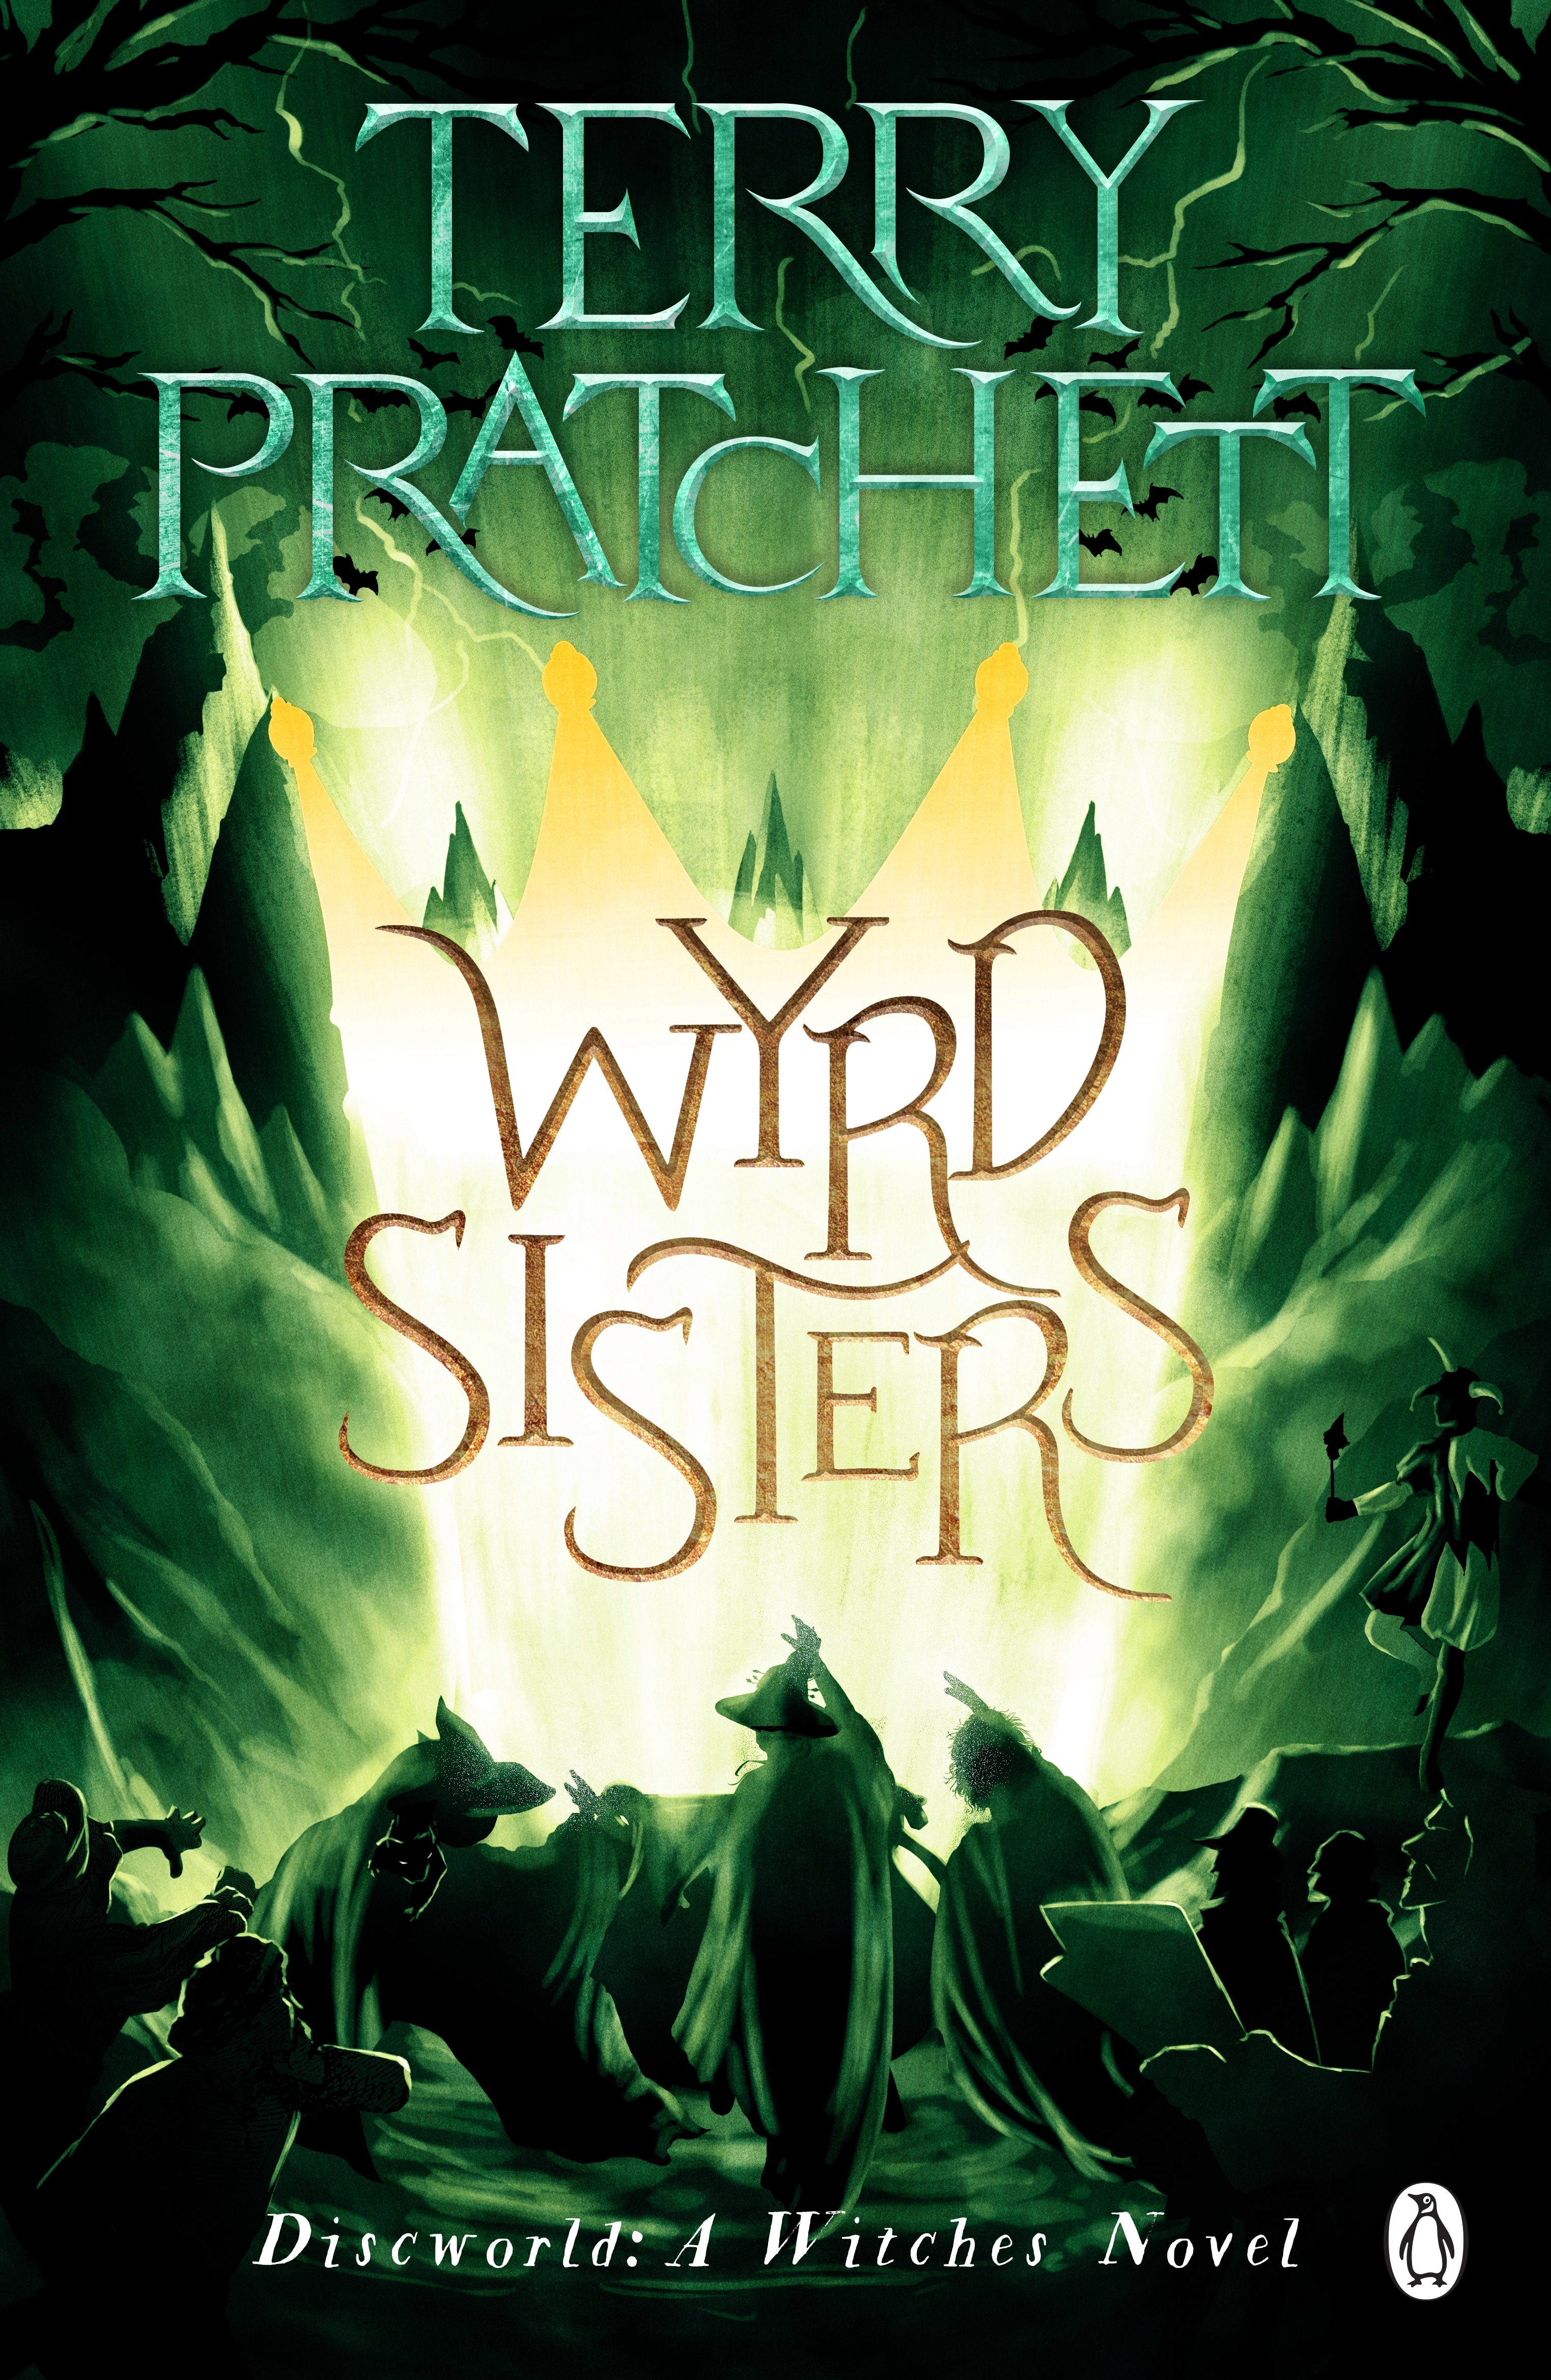 Book “Wyrd Sisters” by Terry Pratchett — April 28, 2022